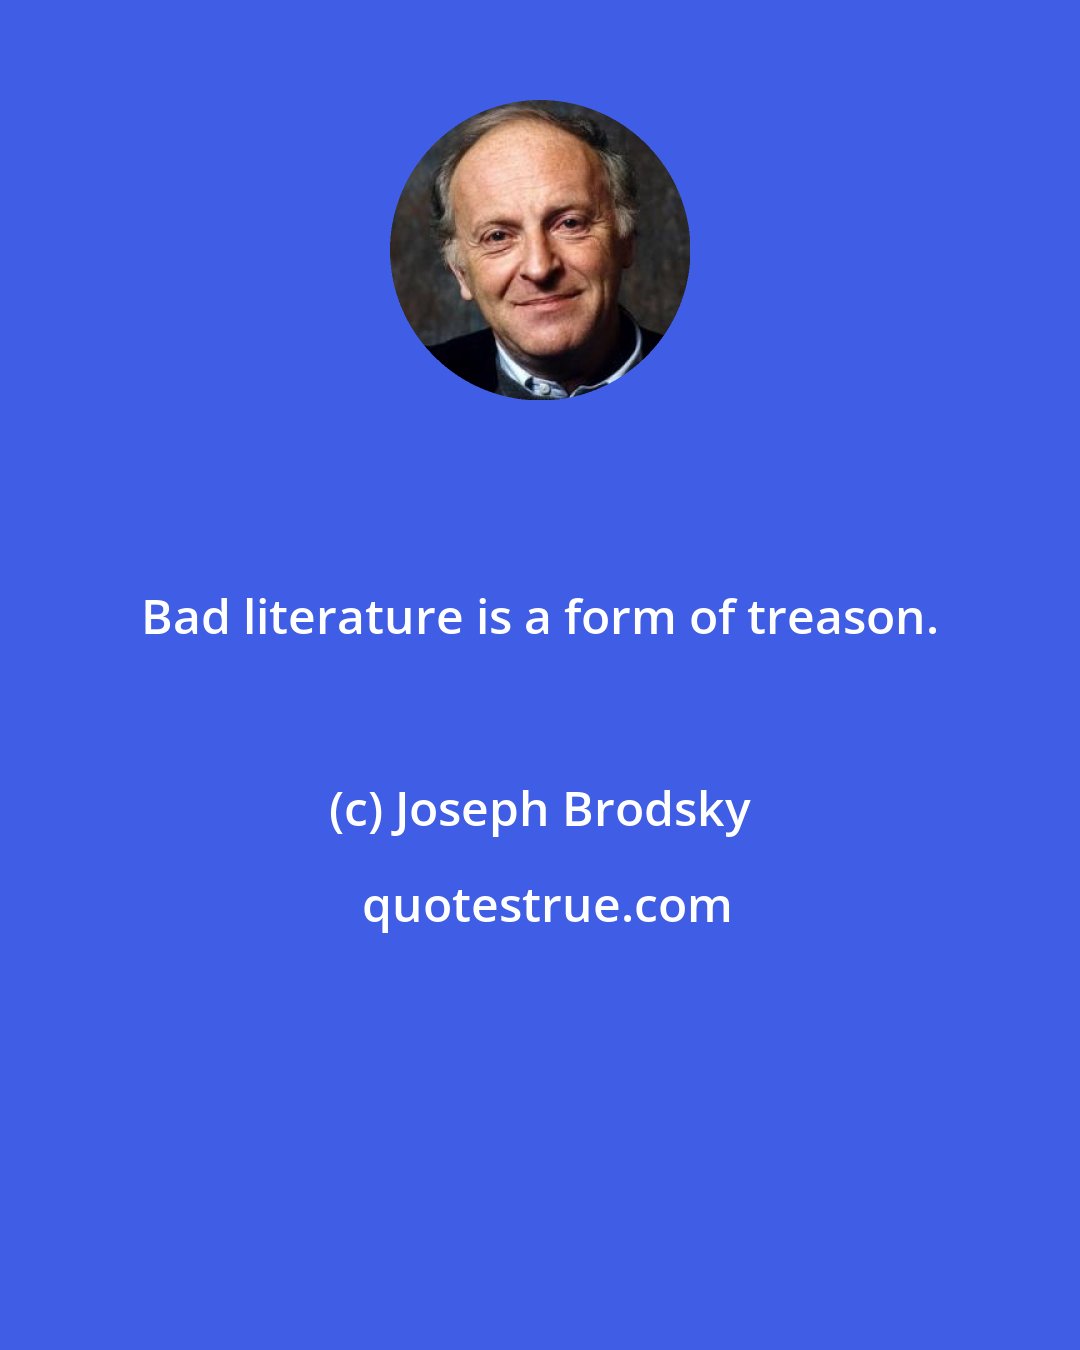 Joseph Brodsky: Bad literature is a form of treason.